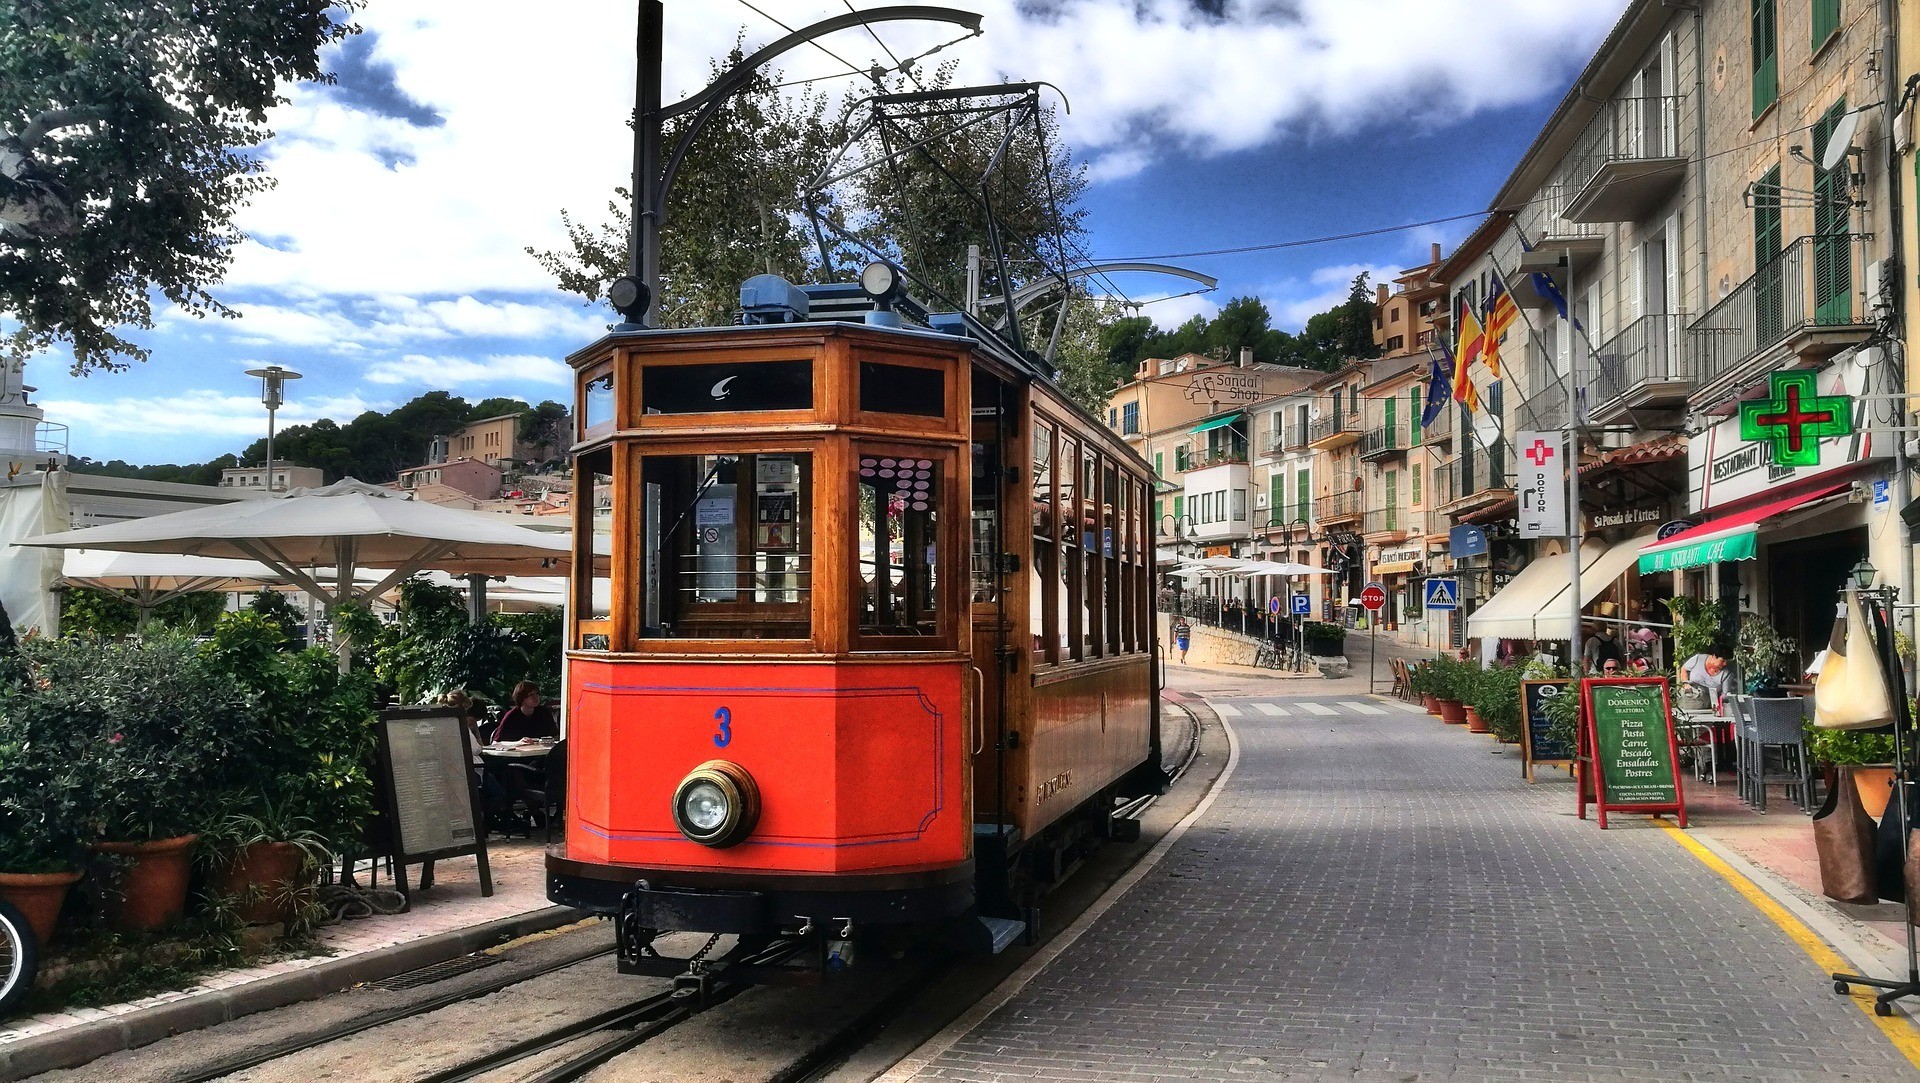 Old tram in Port de Soller Mallorca Photo Christian B on Pixabay